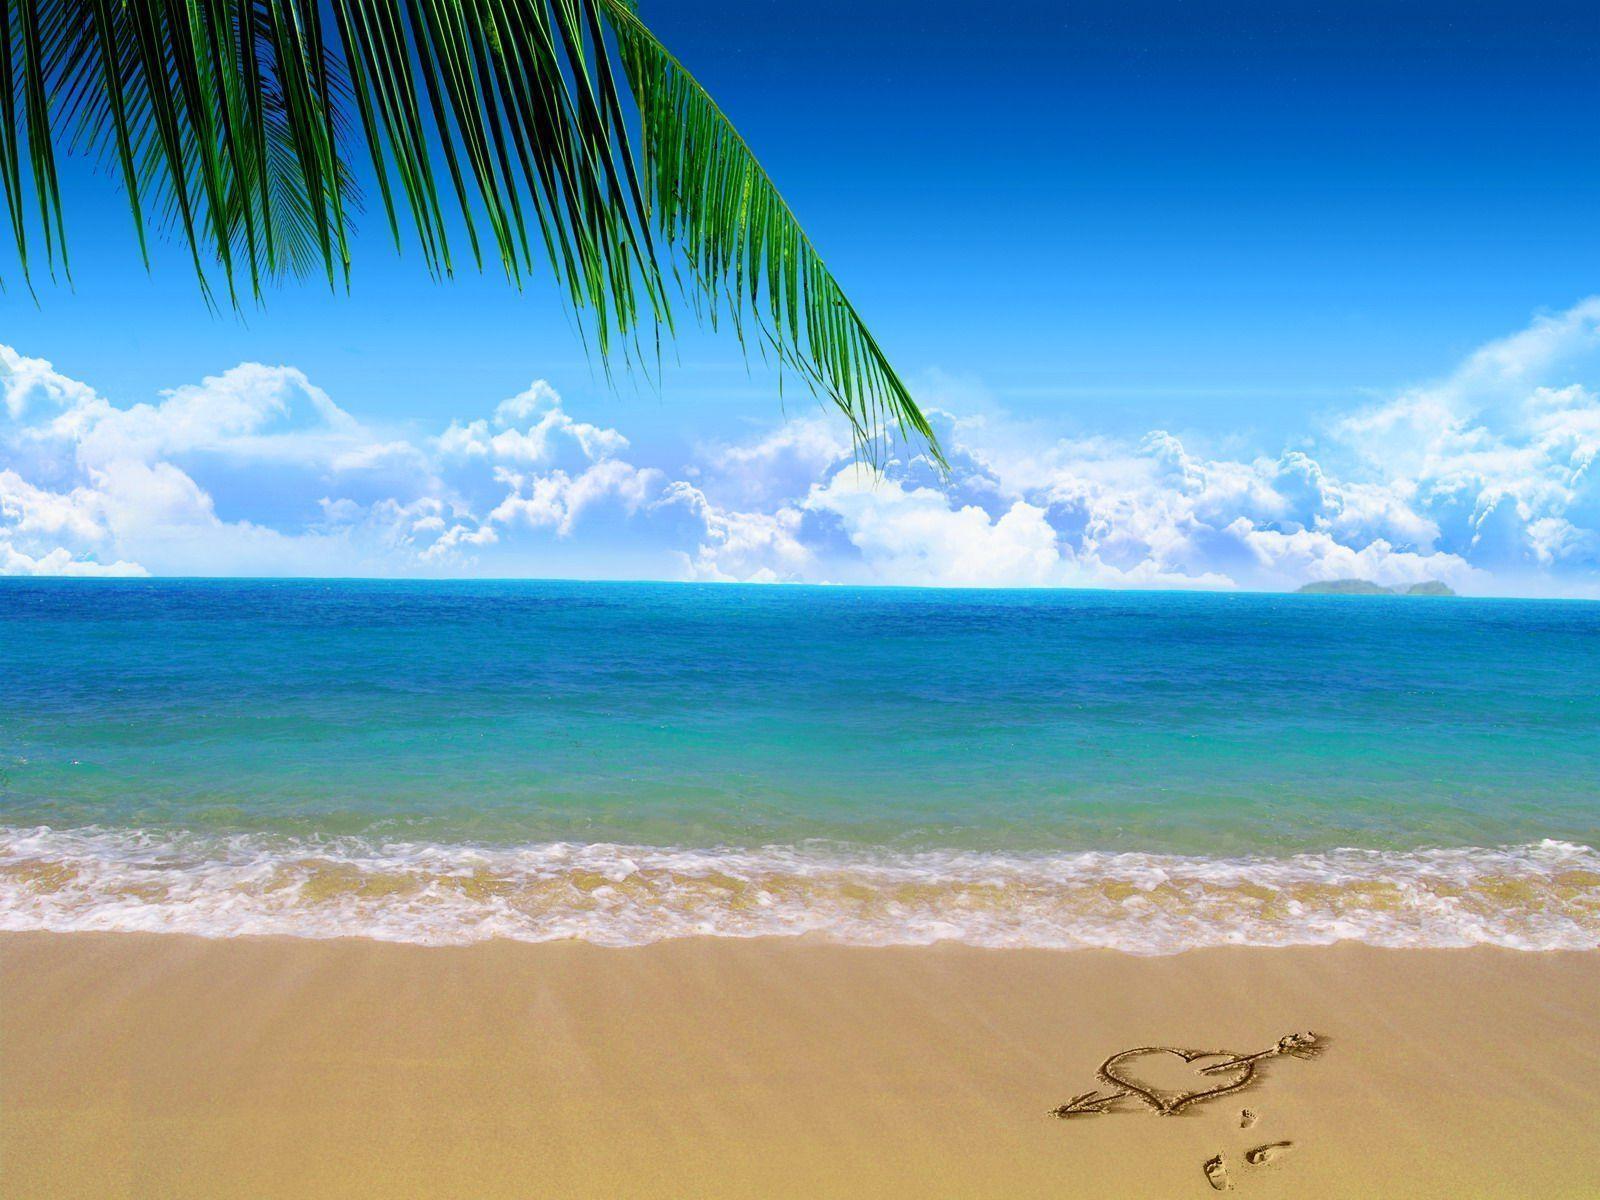 Wallpaper For > Cool Beach Wallpaper For Desktop